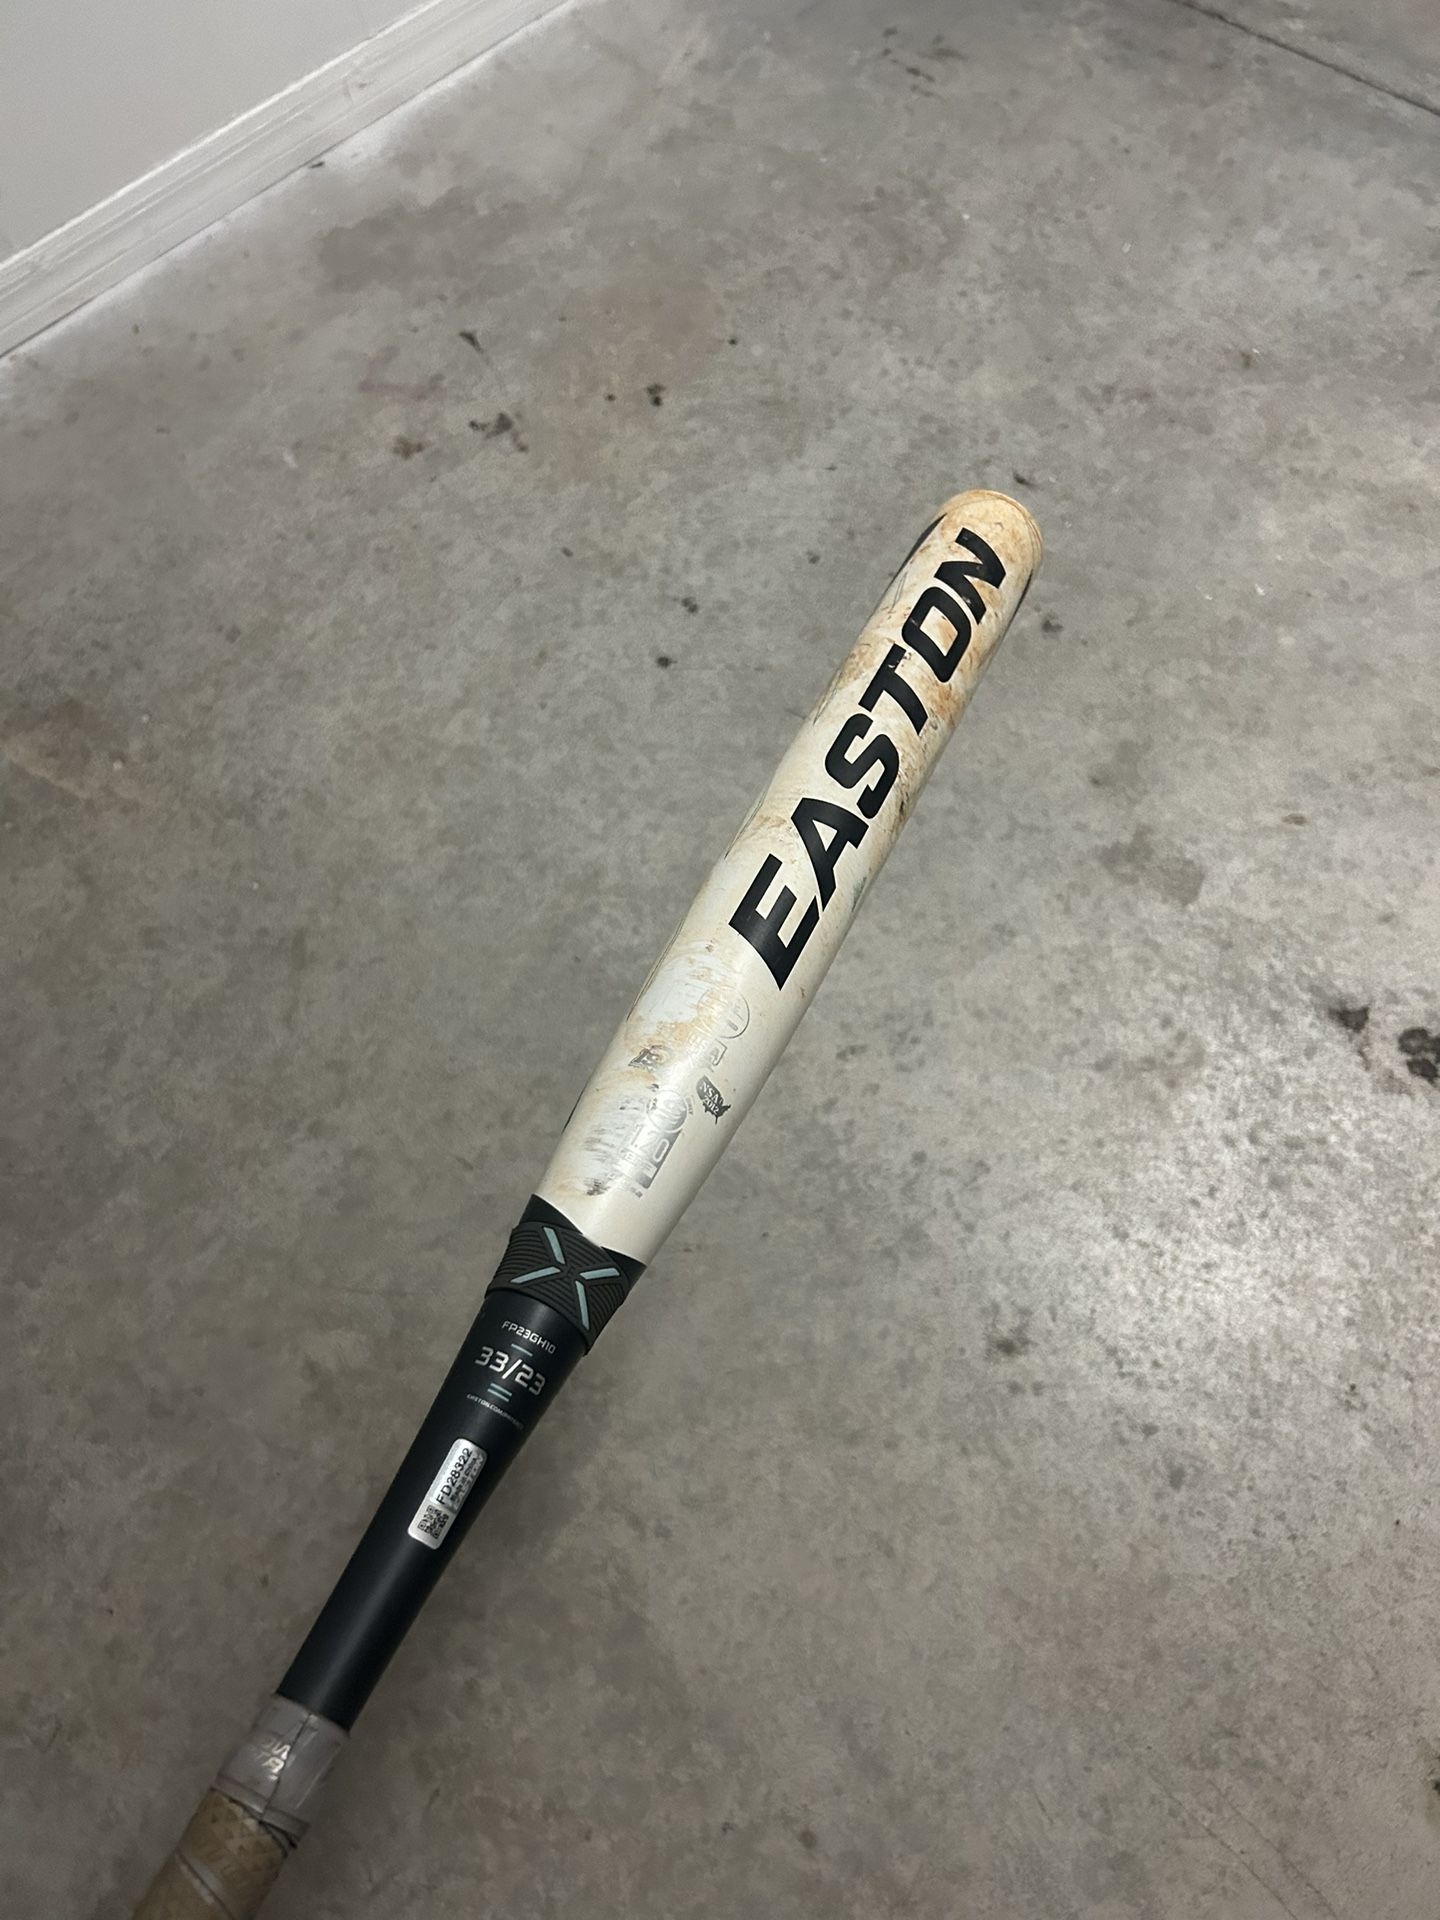 Easton softball bat 